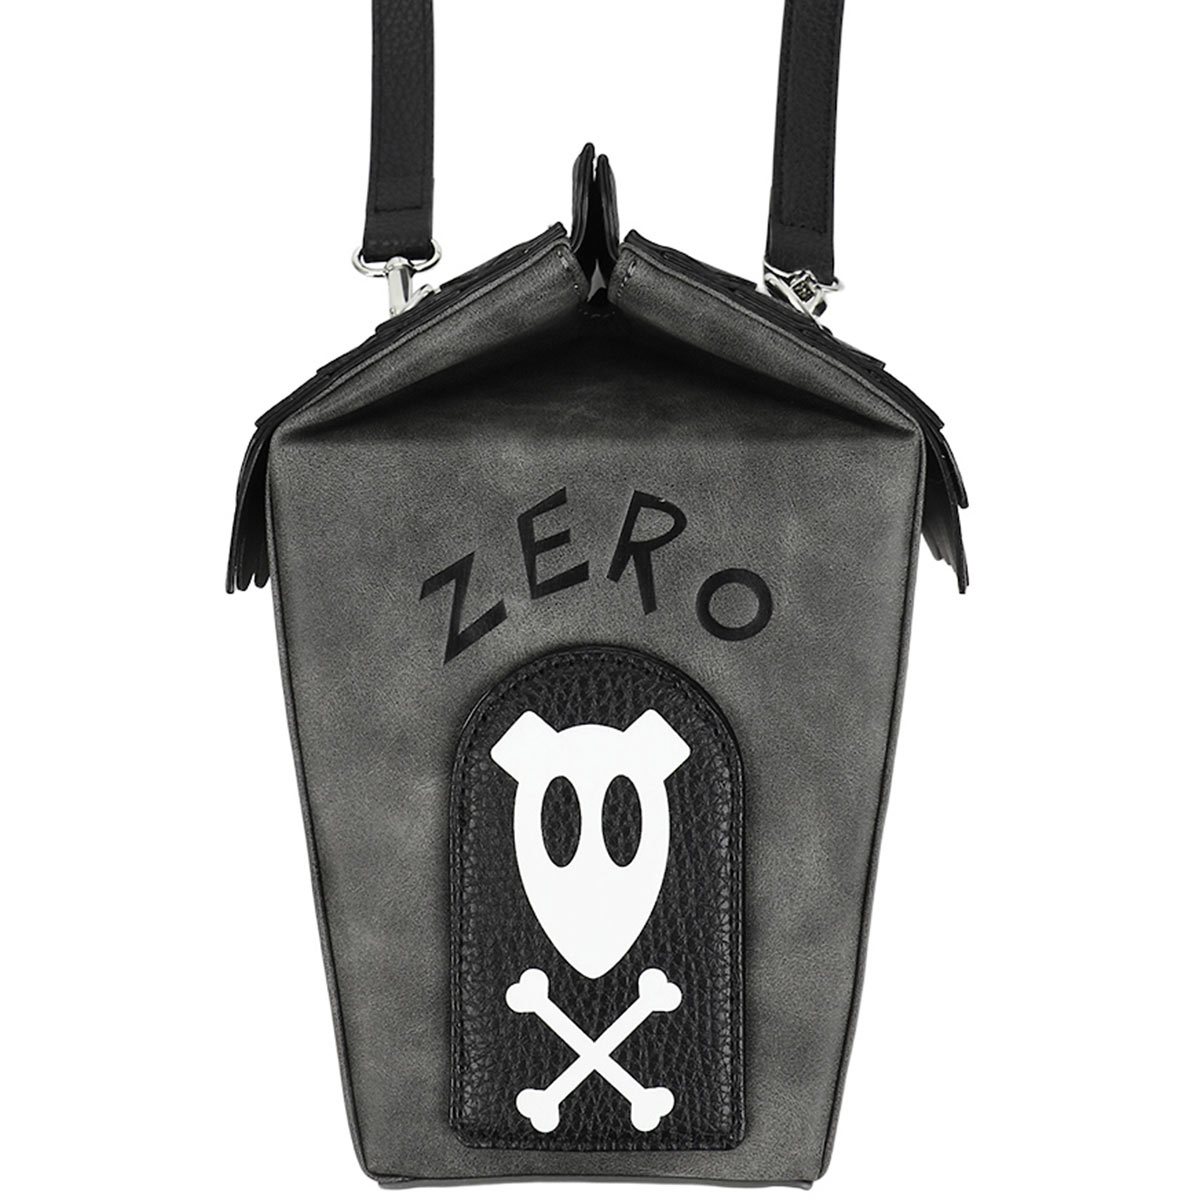 Marble Mini Backpack Crossbody Bag - Black & White